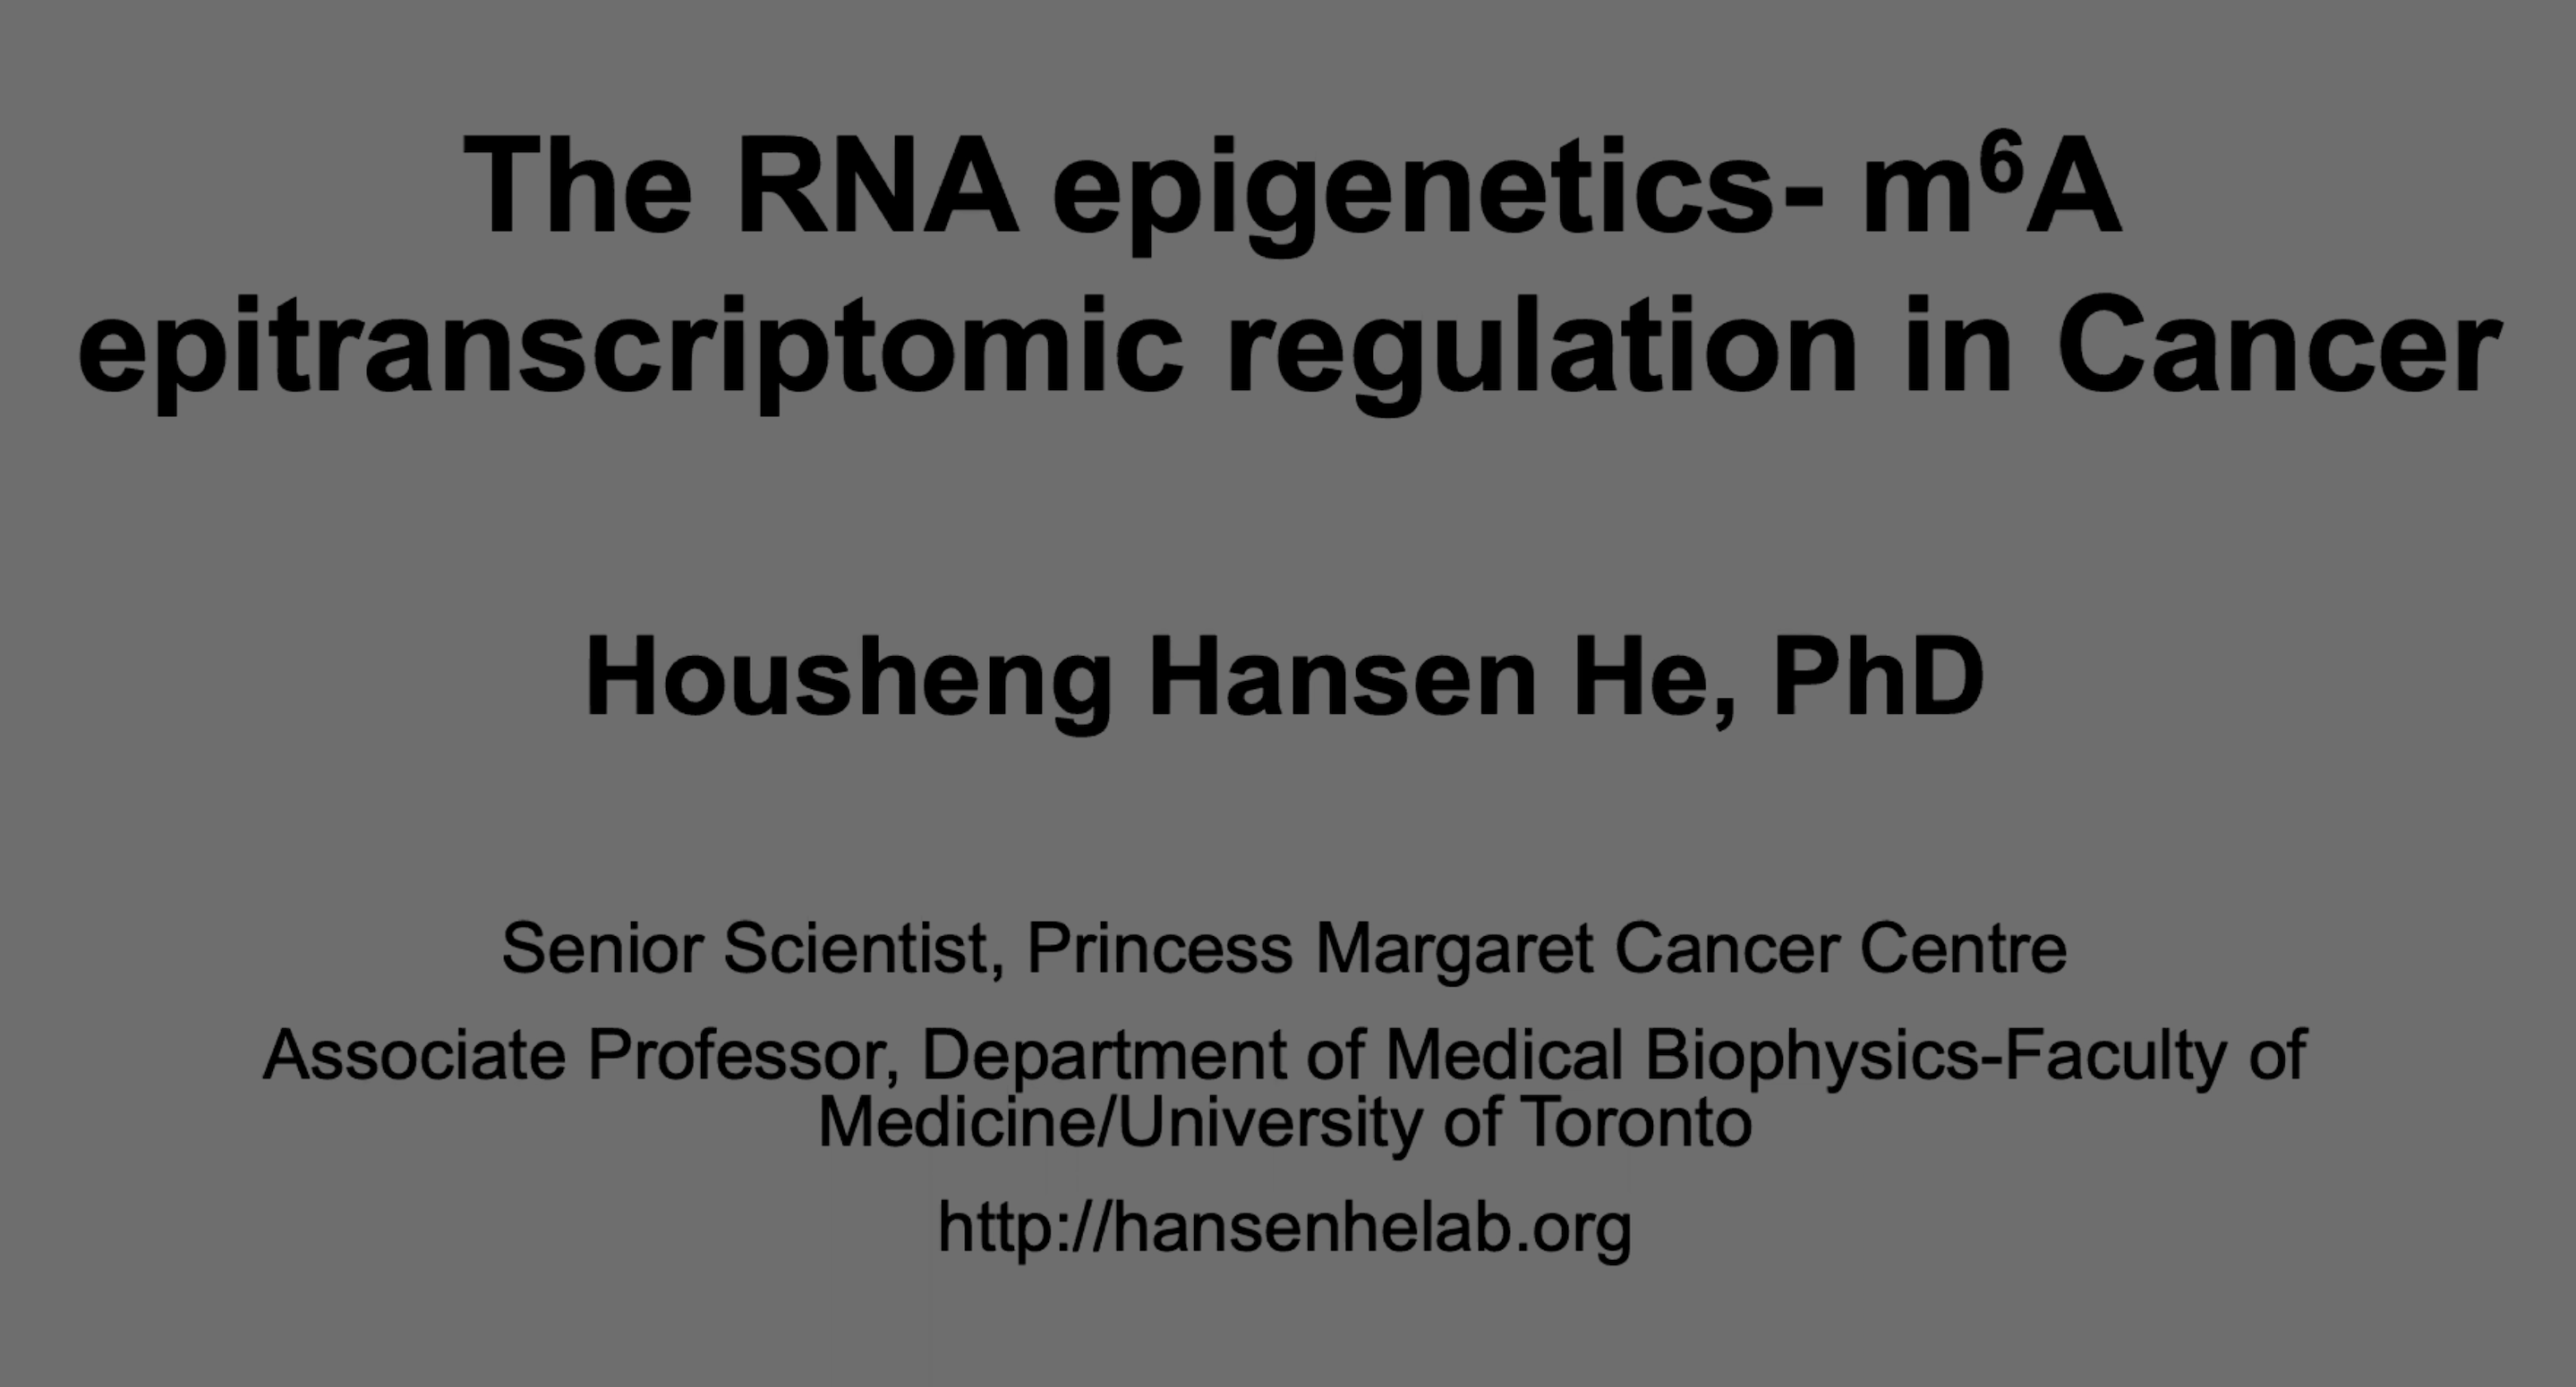 March 7, 2022 | The RNA epigenetics-m6A epitranscriptomic regulation in cancer - Dr. Hansen He